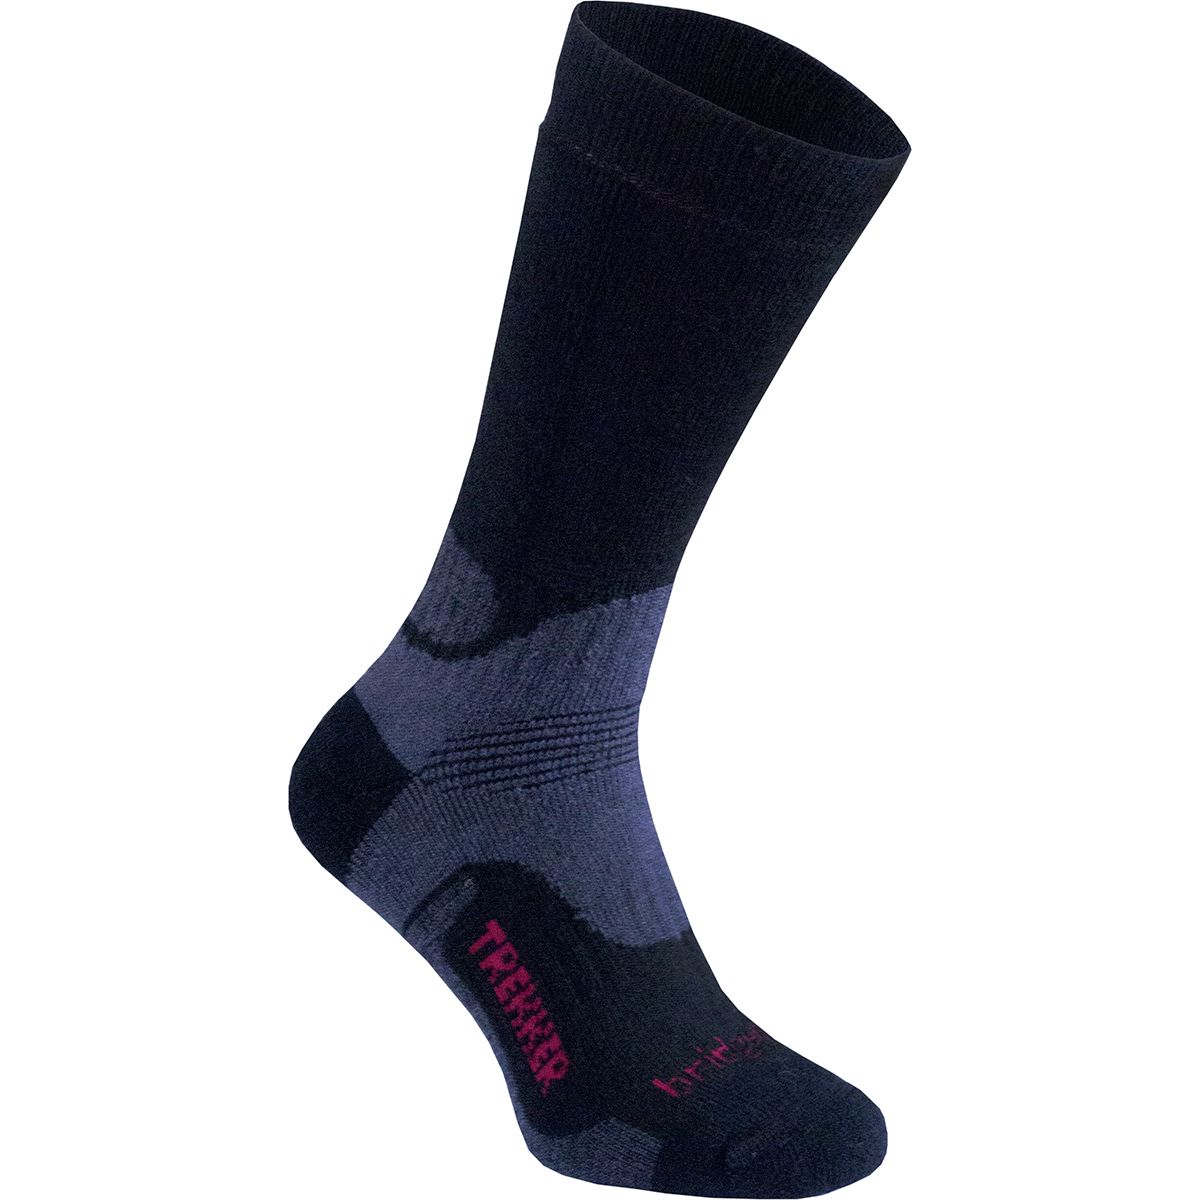 Hike Midweight Merino Endurance Boot Sock - Men